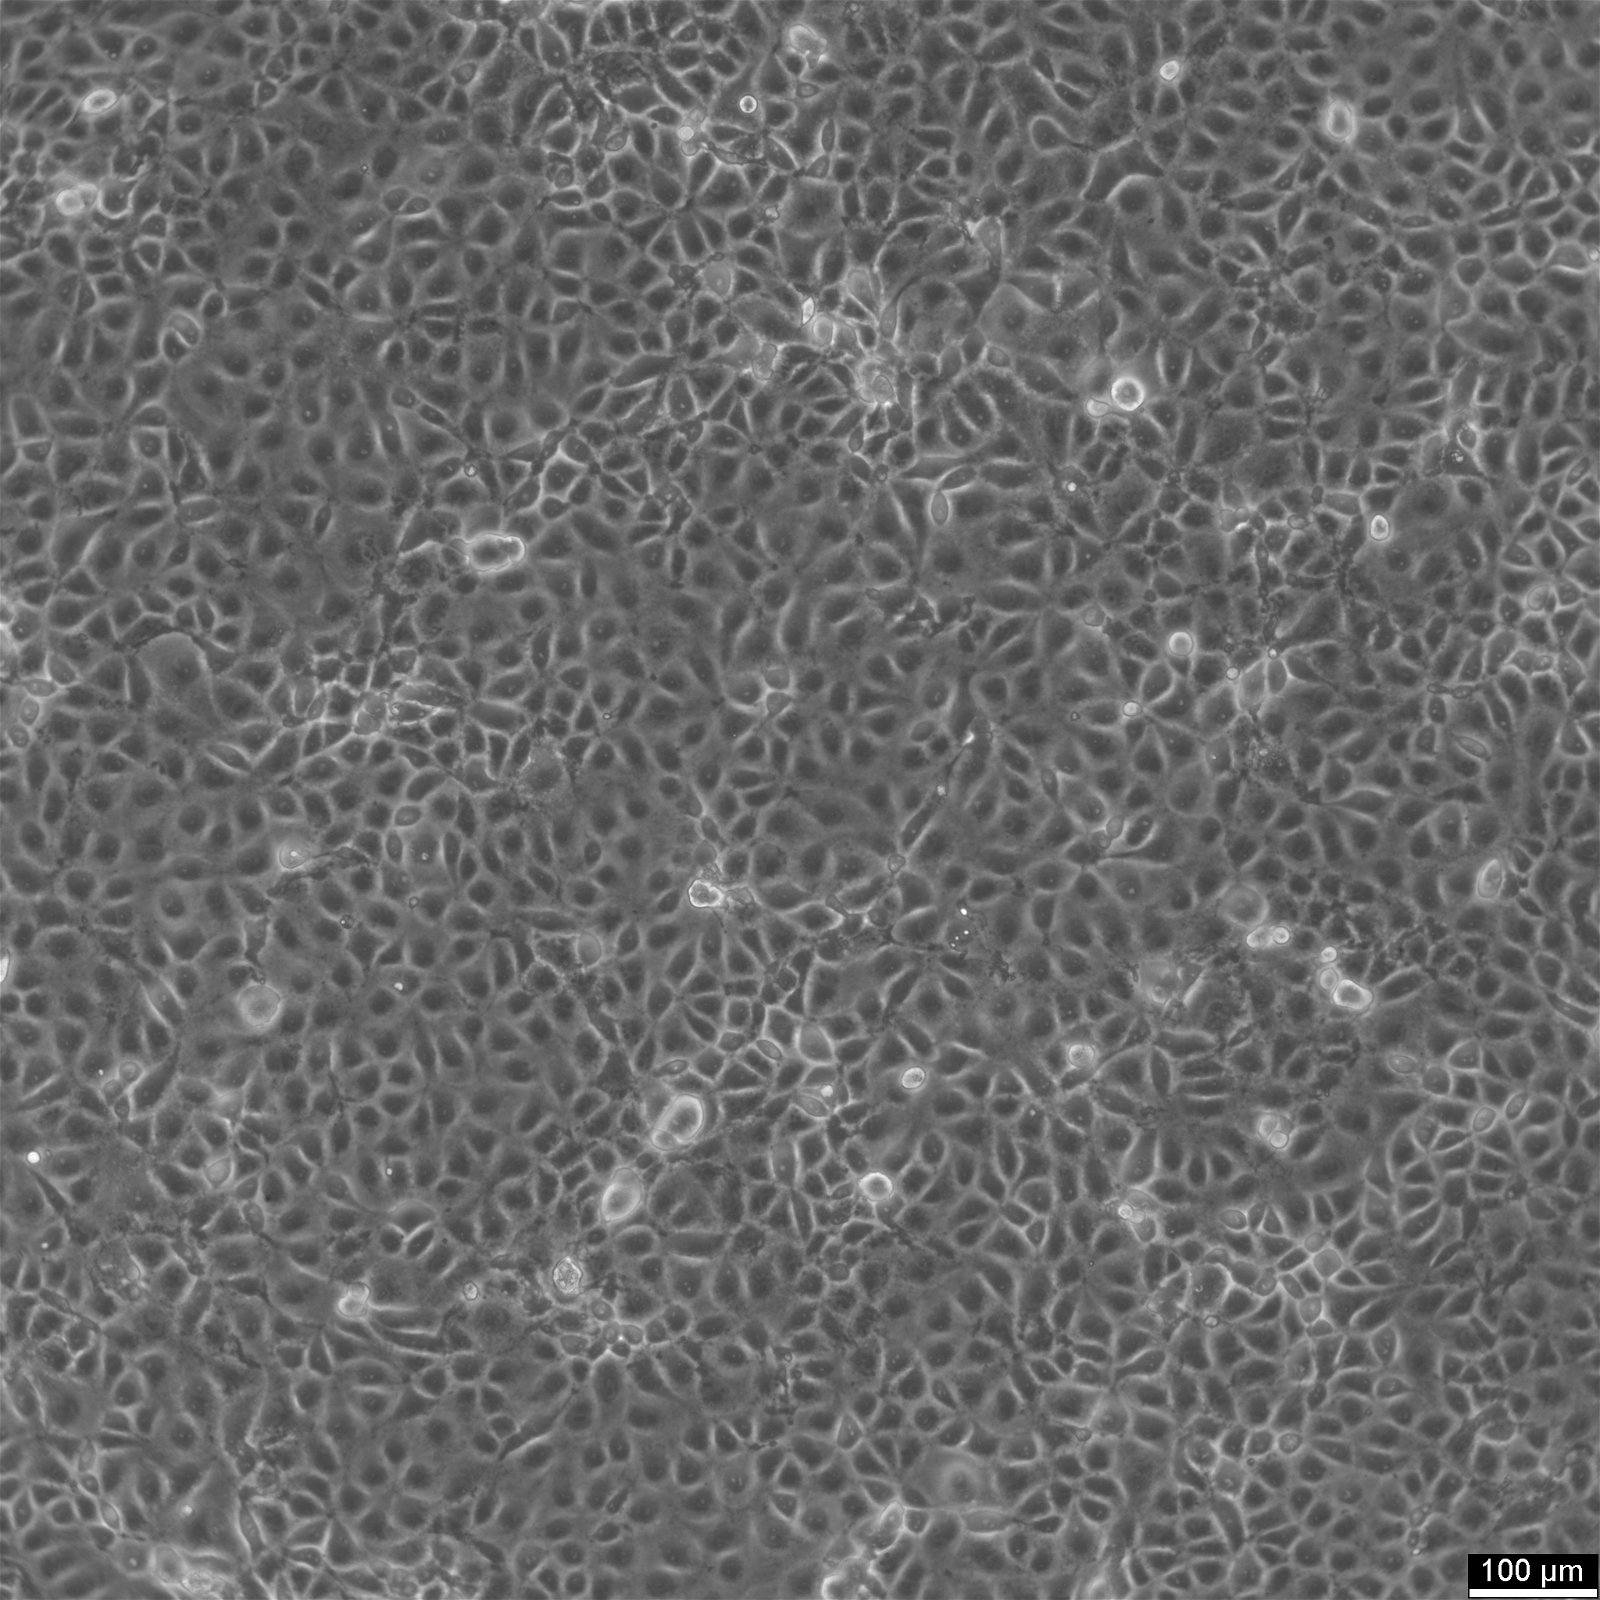 MARC-145 Cells